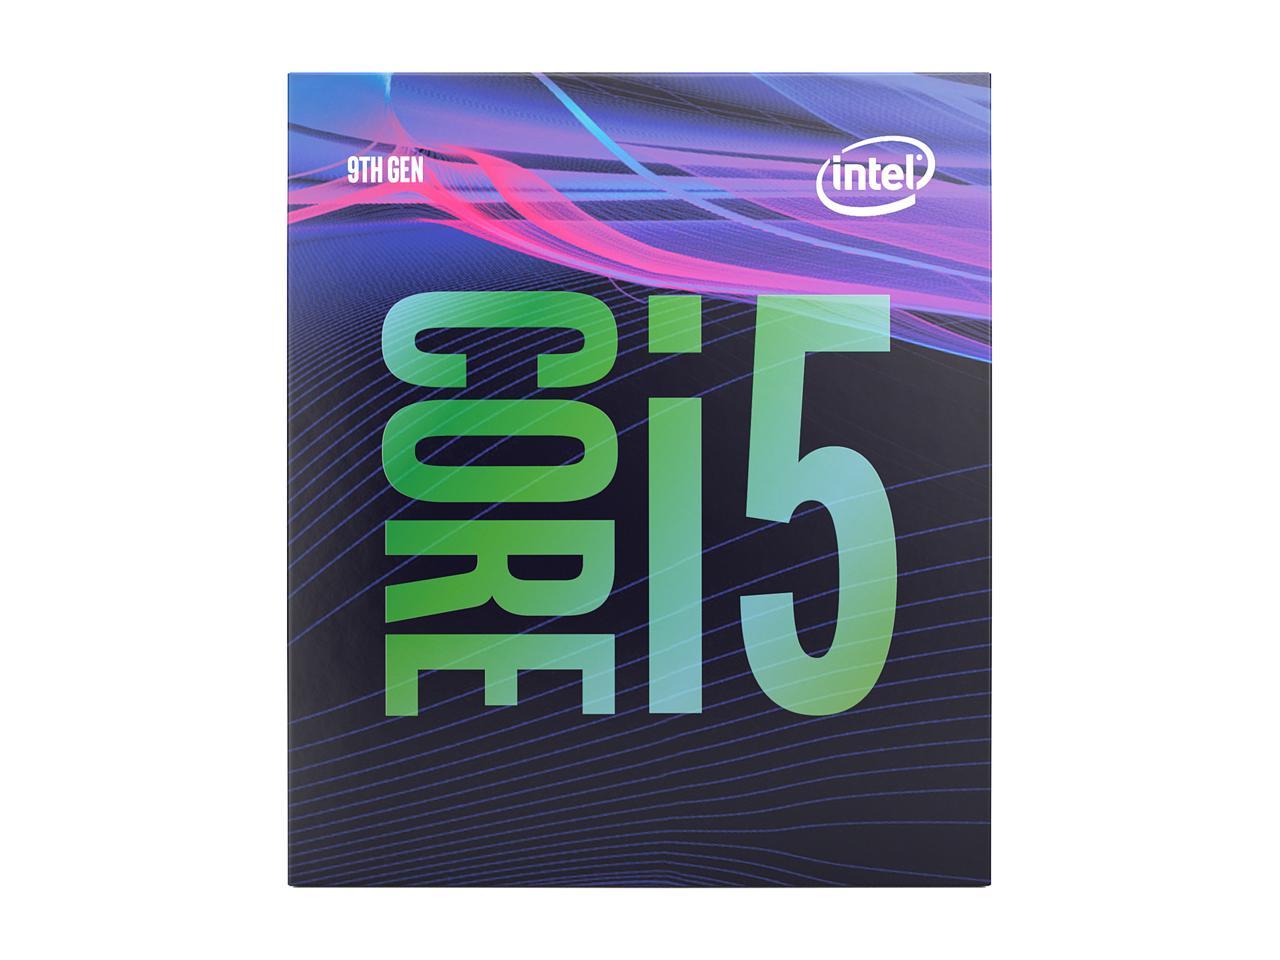 PC/タブレット PCパーツ Intel Core i5 9th Gen - Core i5-9500 Coffee Lake 6-Core 3.0 GHz (4.4 GHz  Turbo) LGA 1151 (300 Series) 65W BX80684i59500 Desktop Processor Intel UHD  